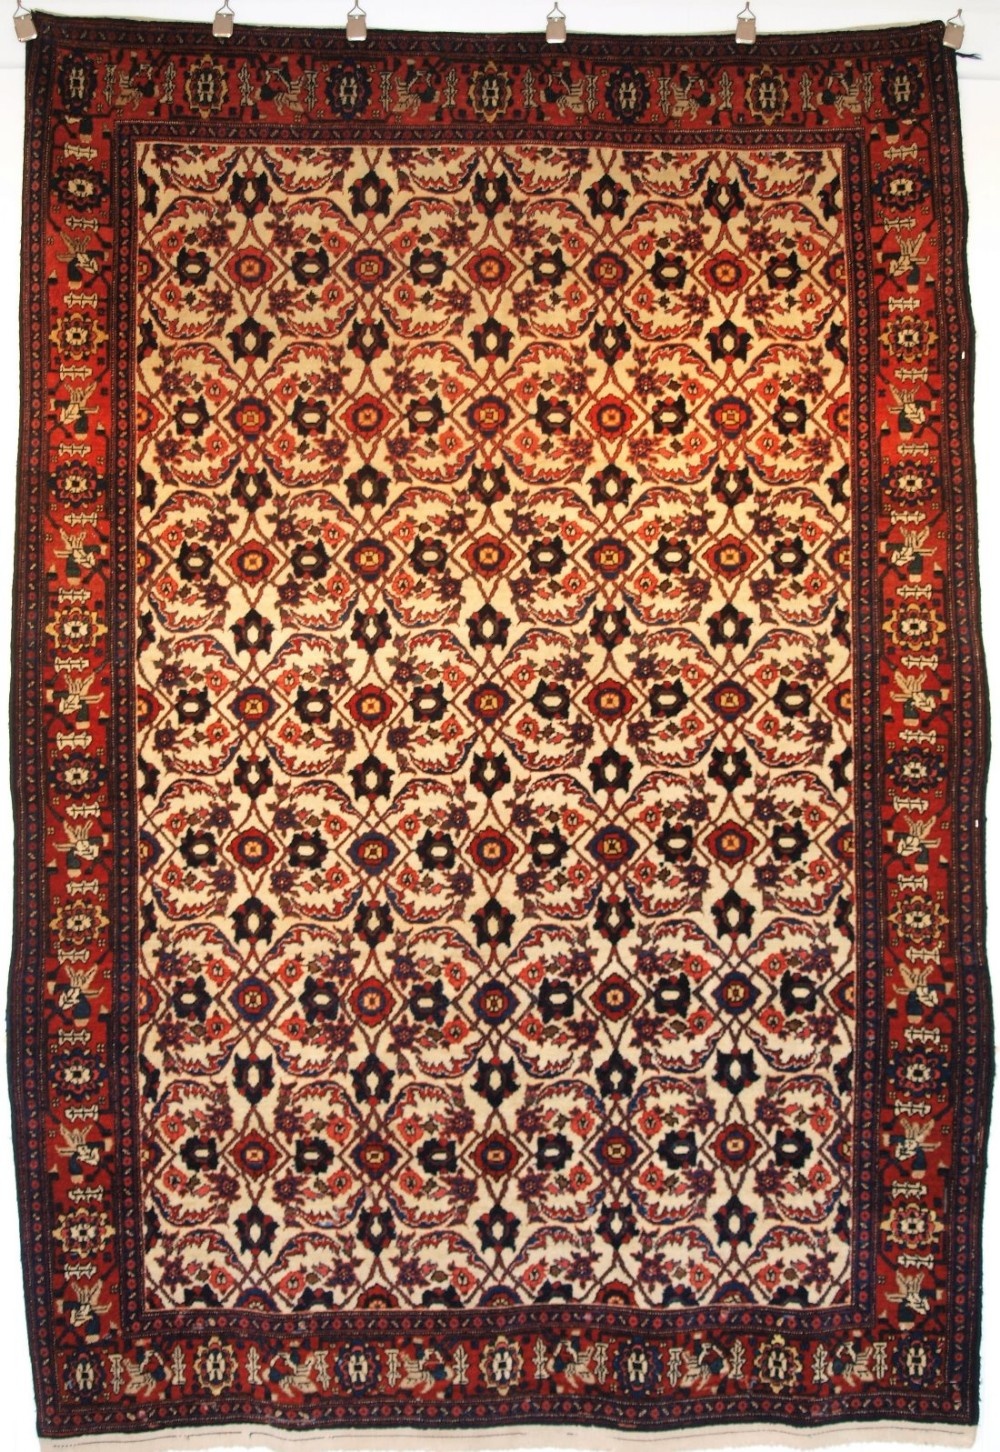 antique senneh rug ivory ground with herati design full pile circa 1900